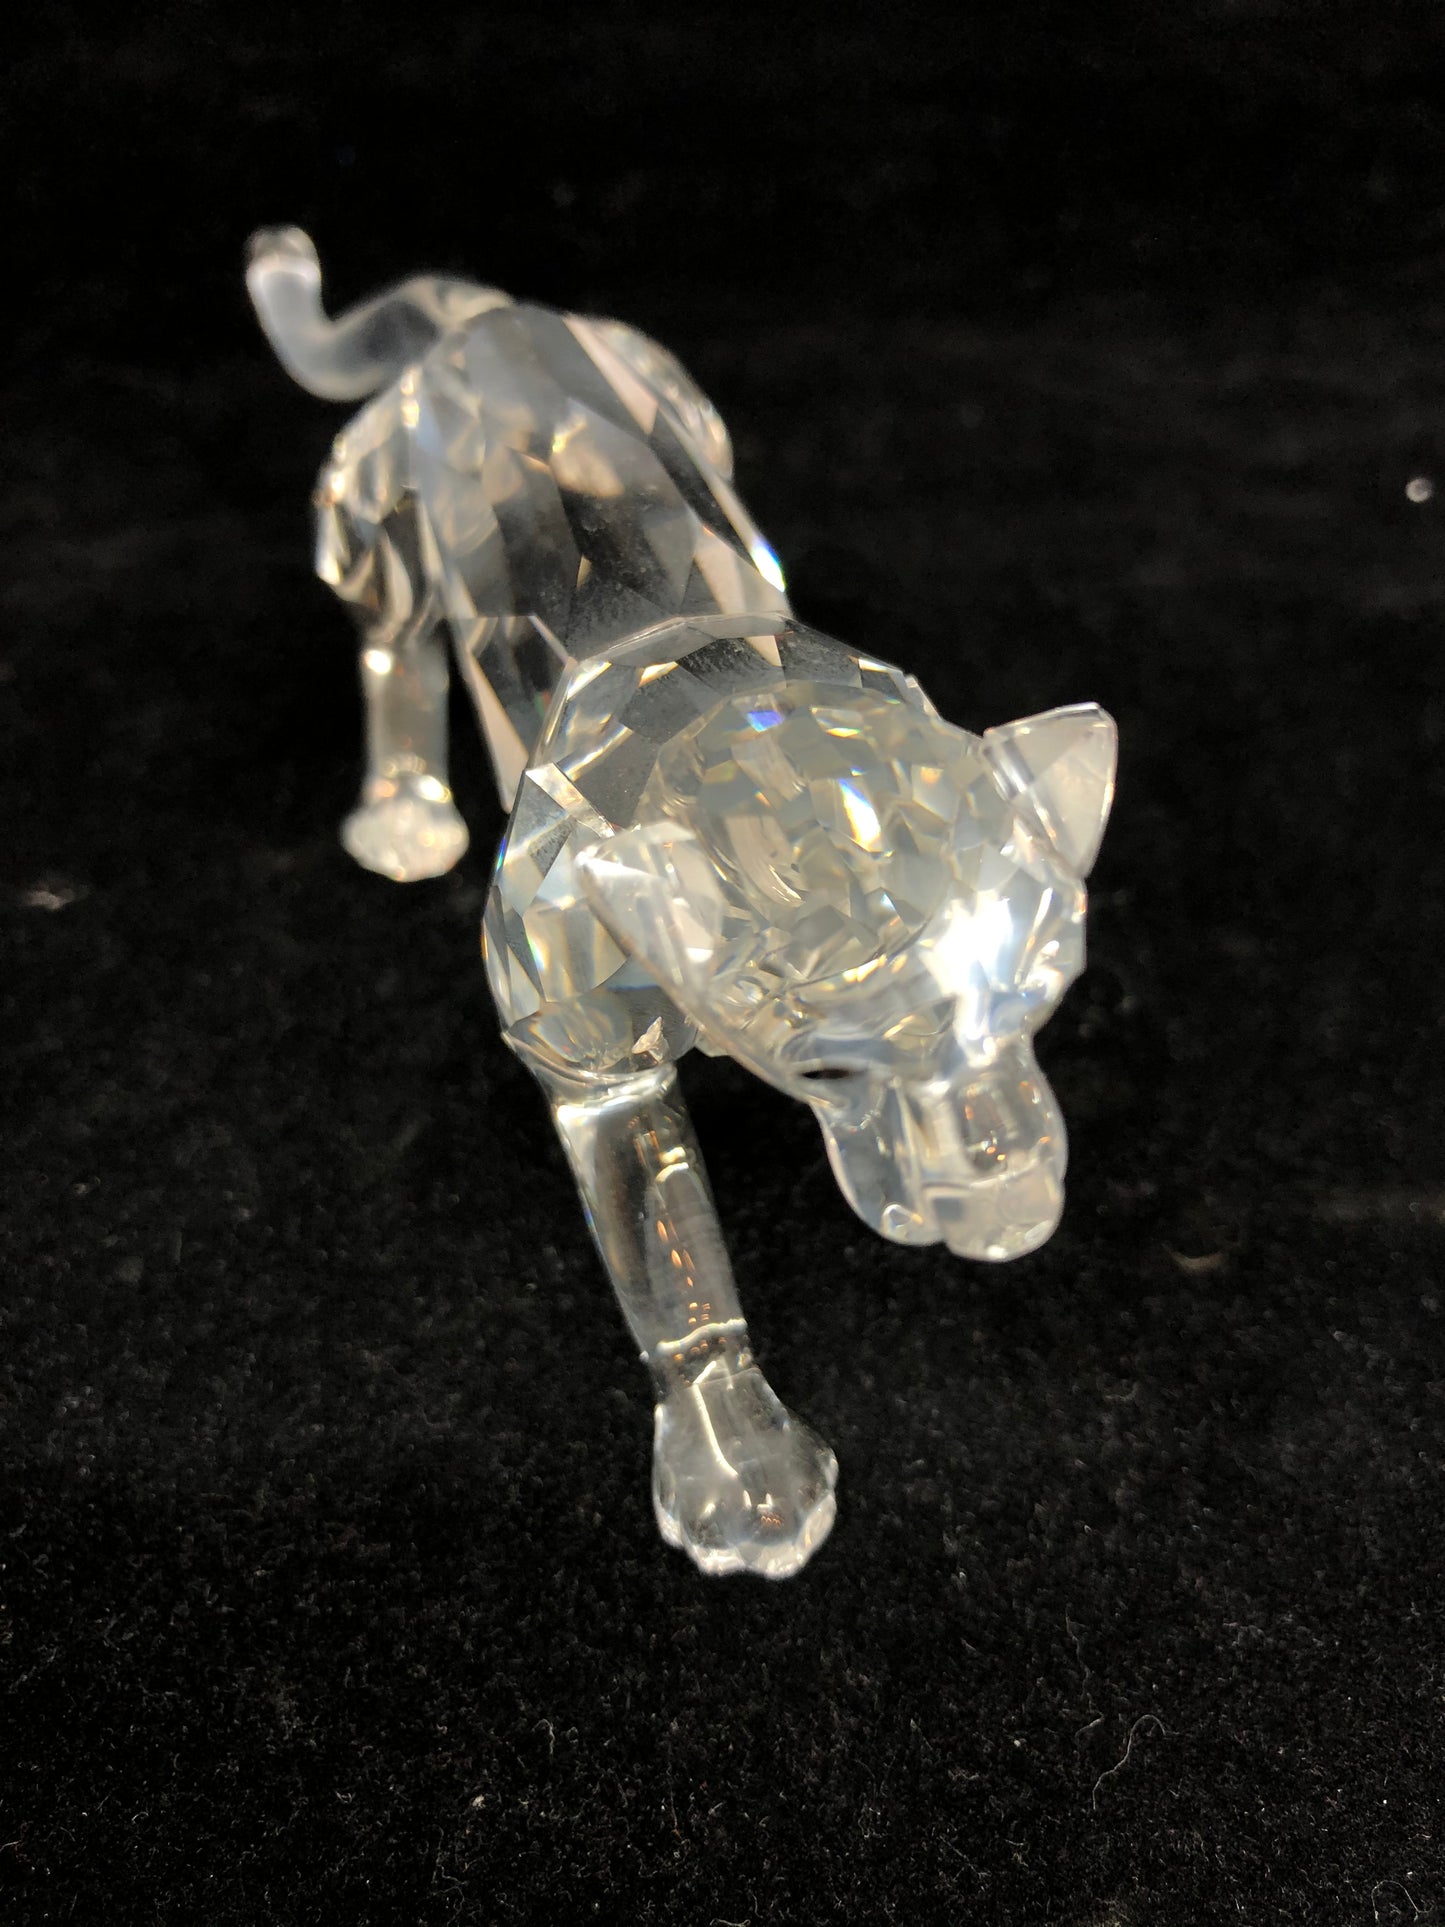 Swarovski "African Wildlife" Leopard Crystal Figurine